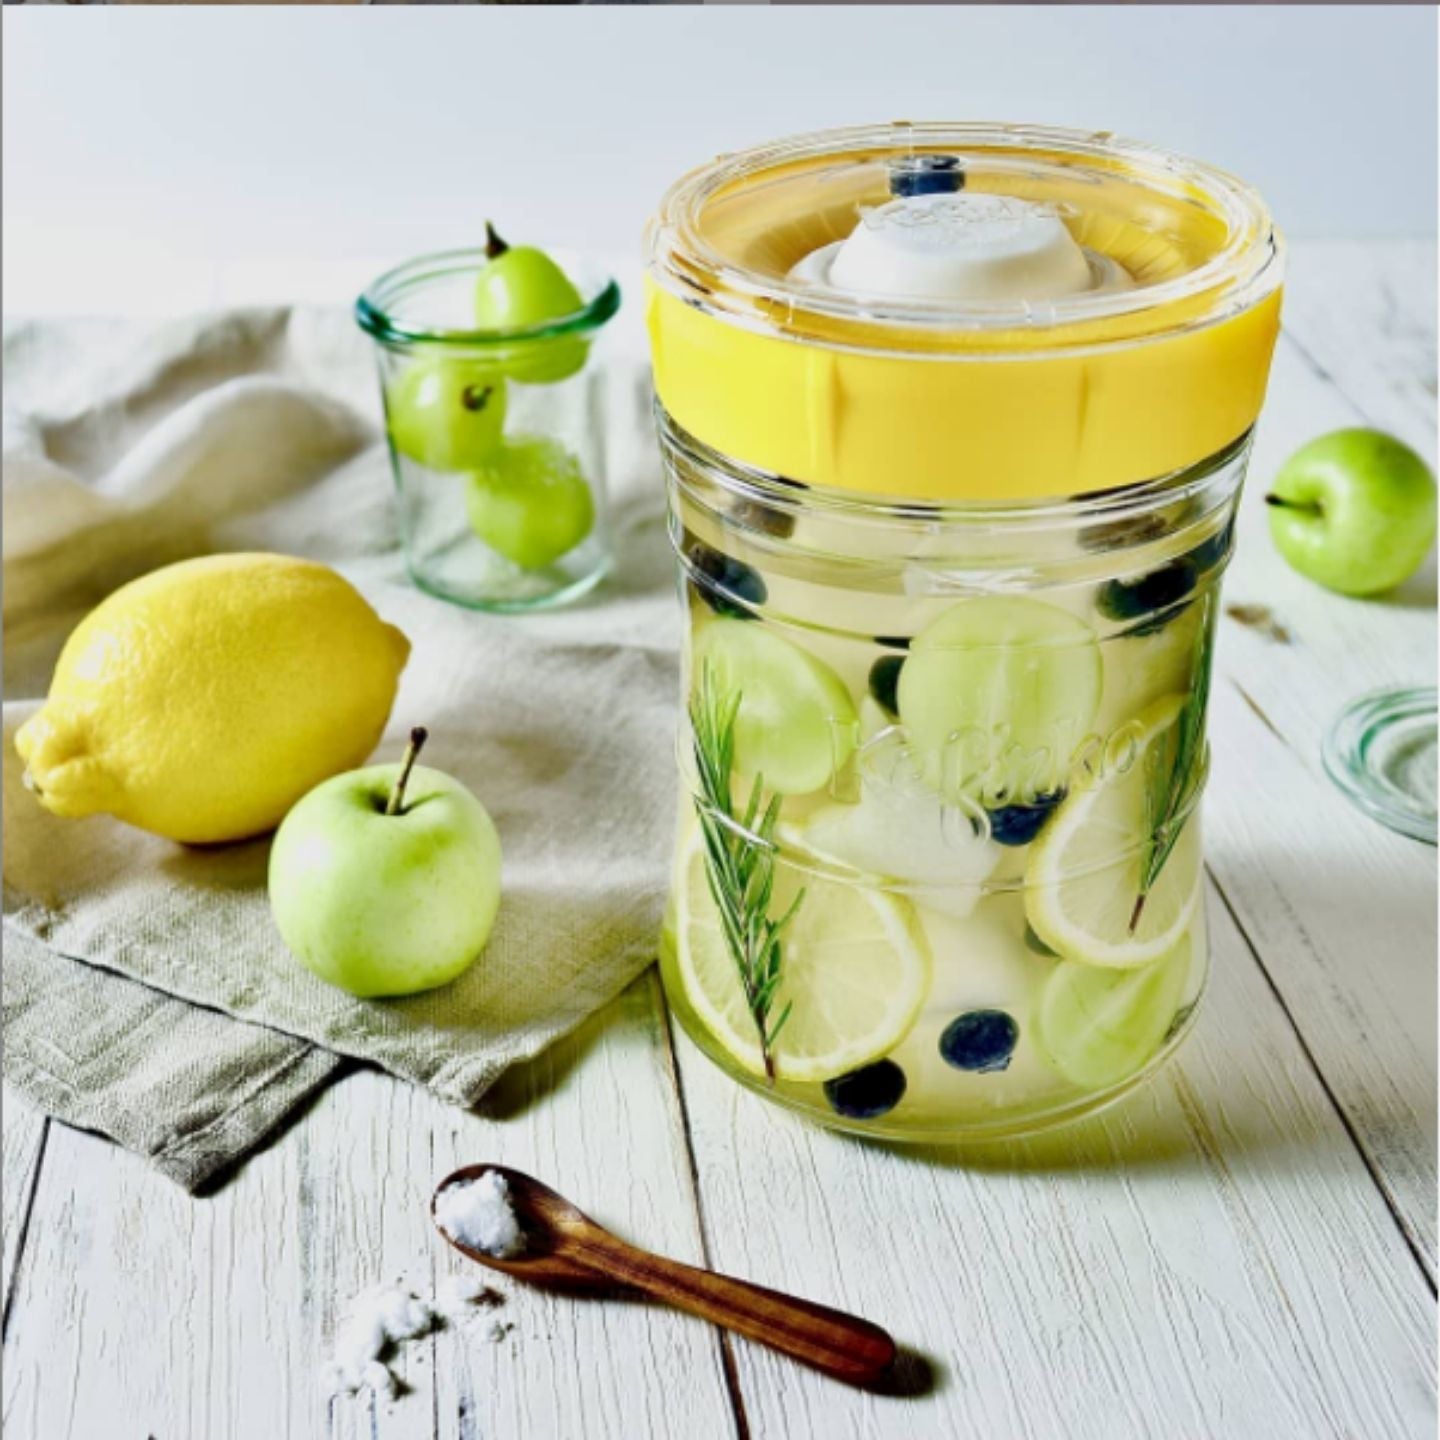 tarro de cristal fermentando agua limon y trozos de manzana